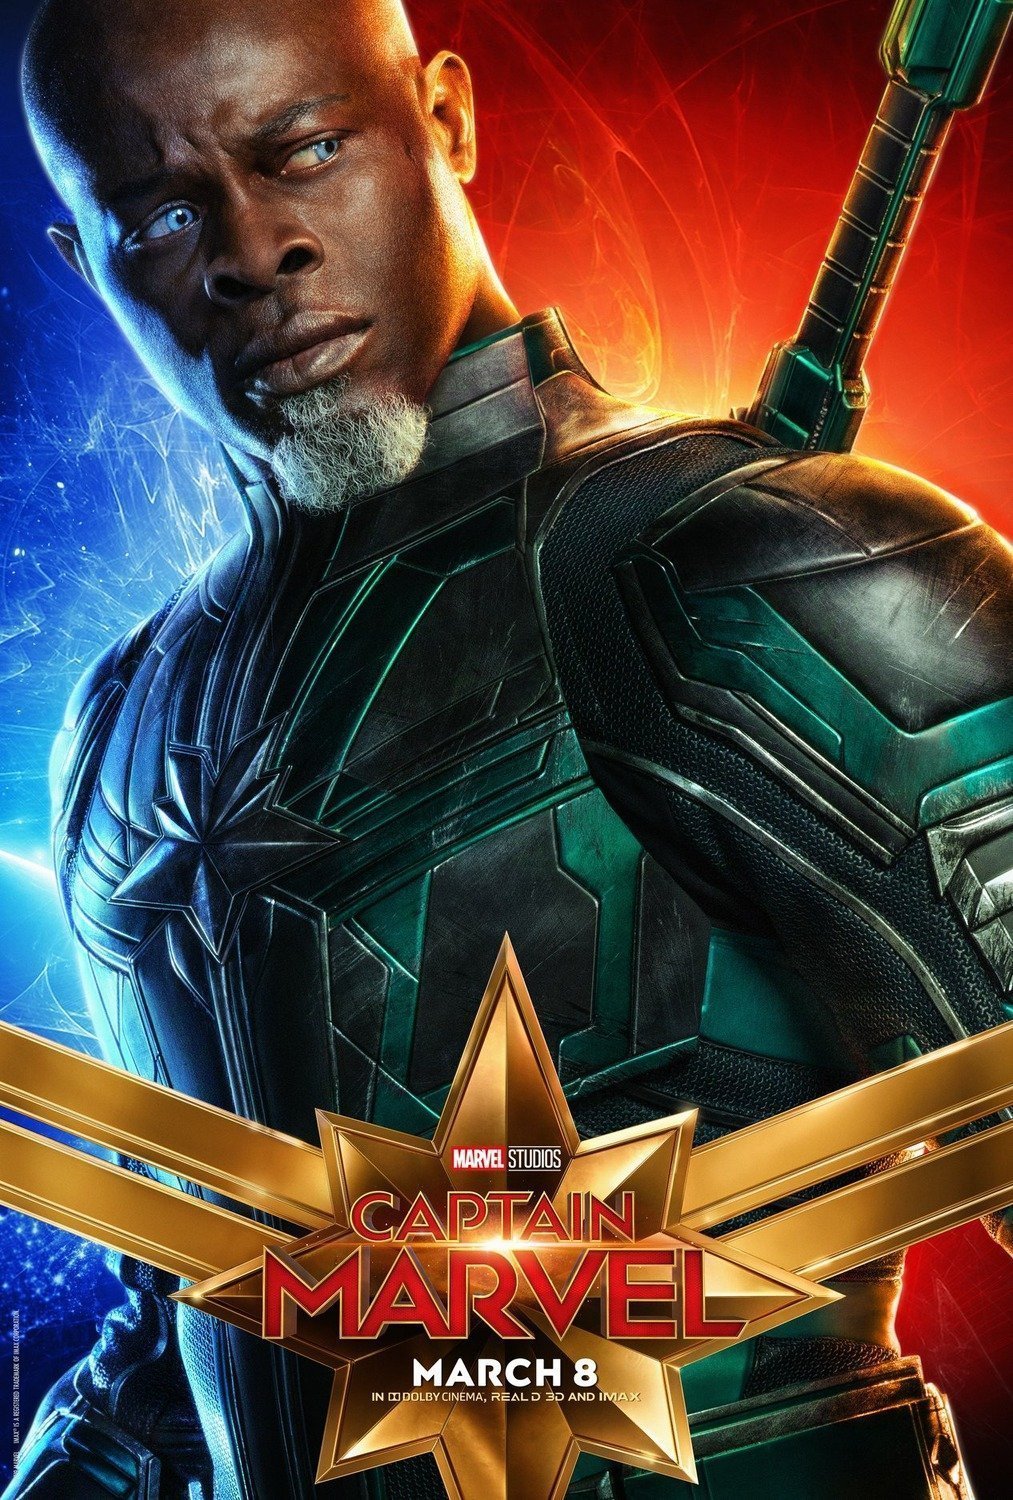 Poster du film Captain Marvel avec Djimon Hounsou (Korath)